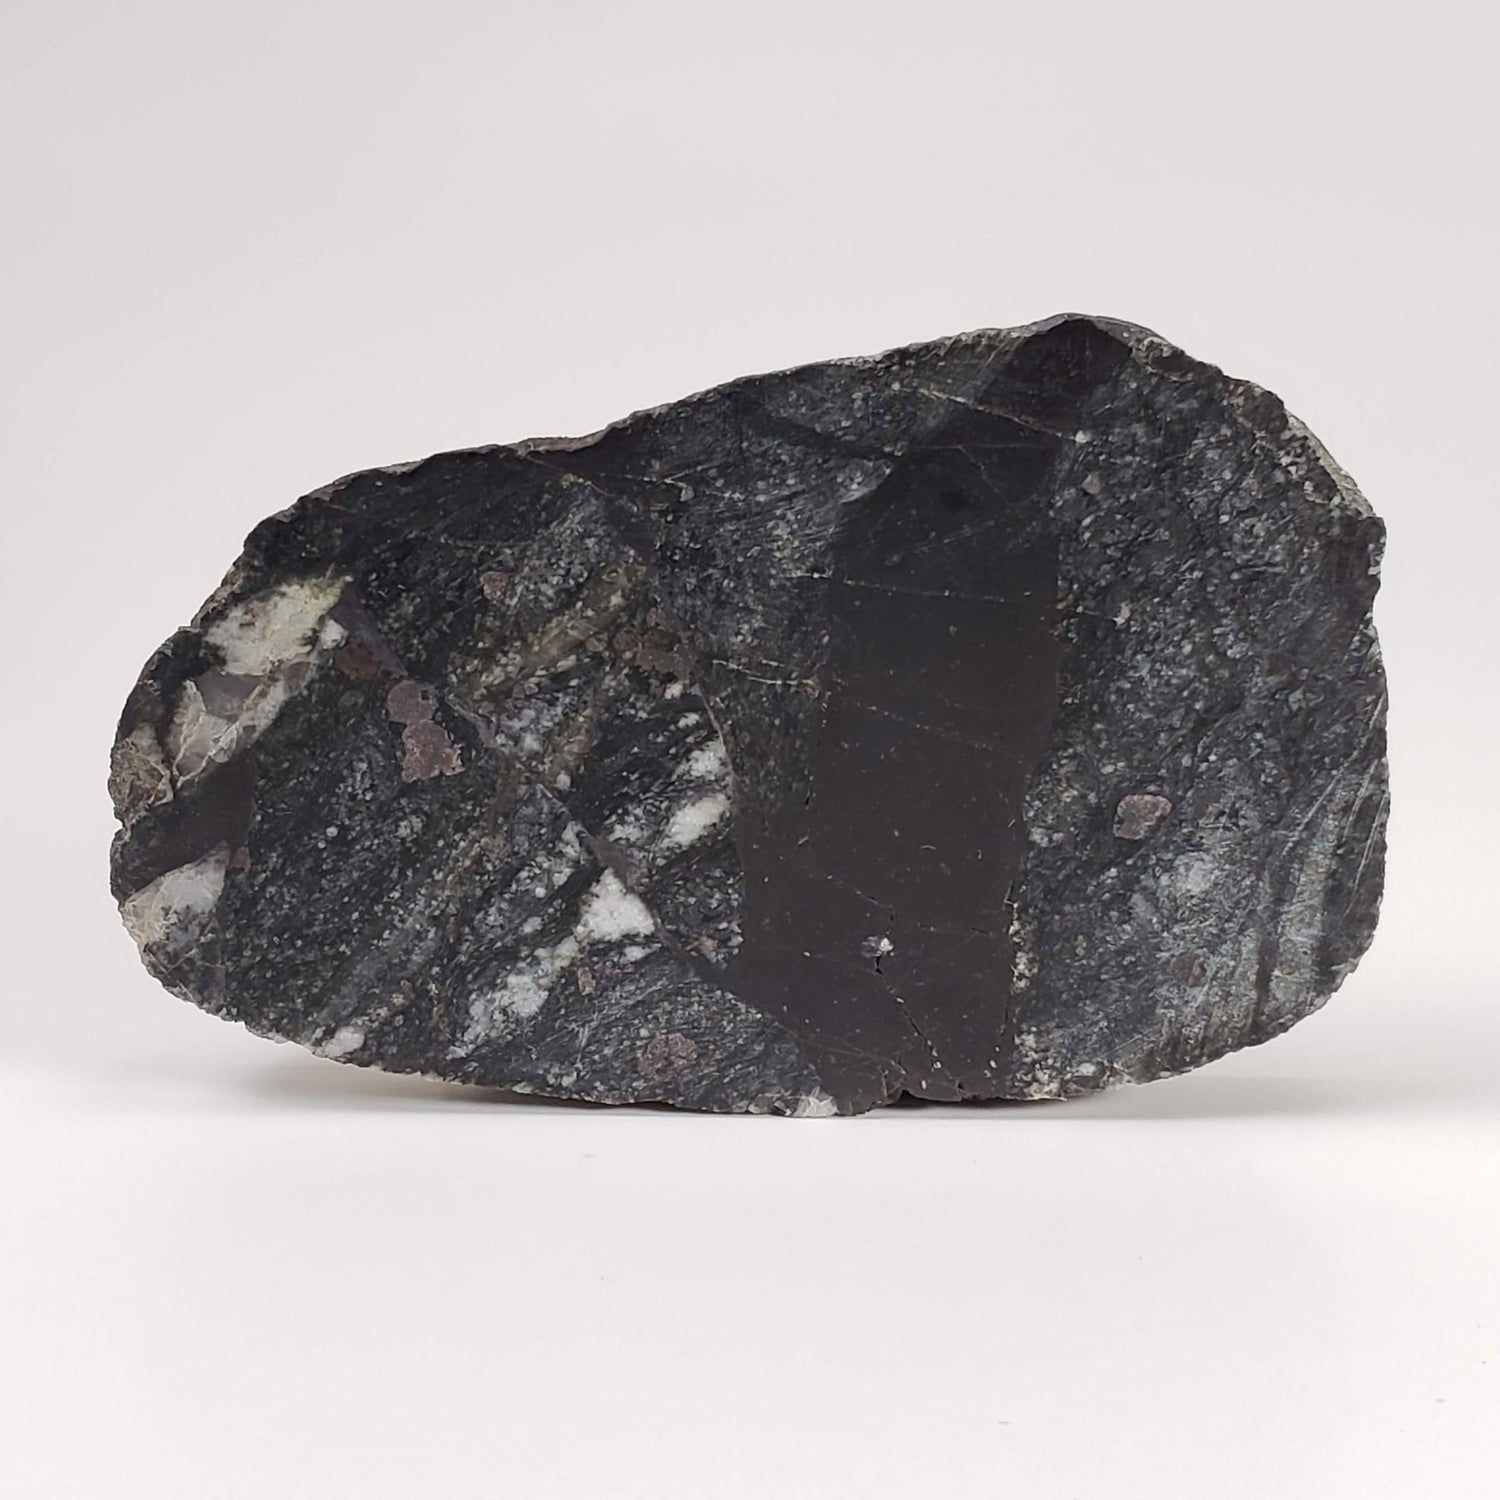 Dellenites Impact Melt Rock | 100 grams | HT Tagamite | Dellen Crater, Sweden